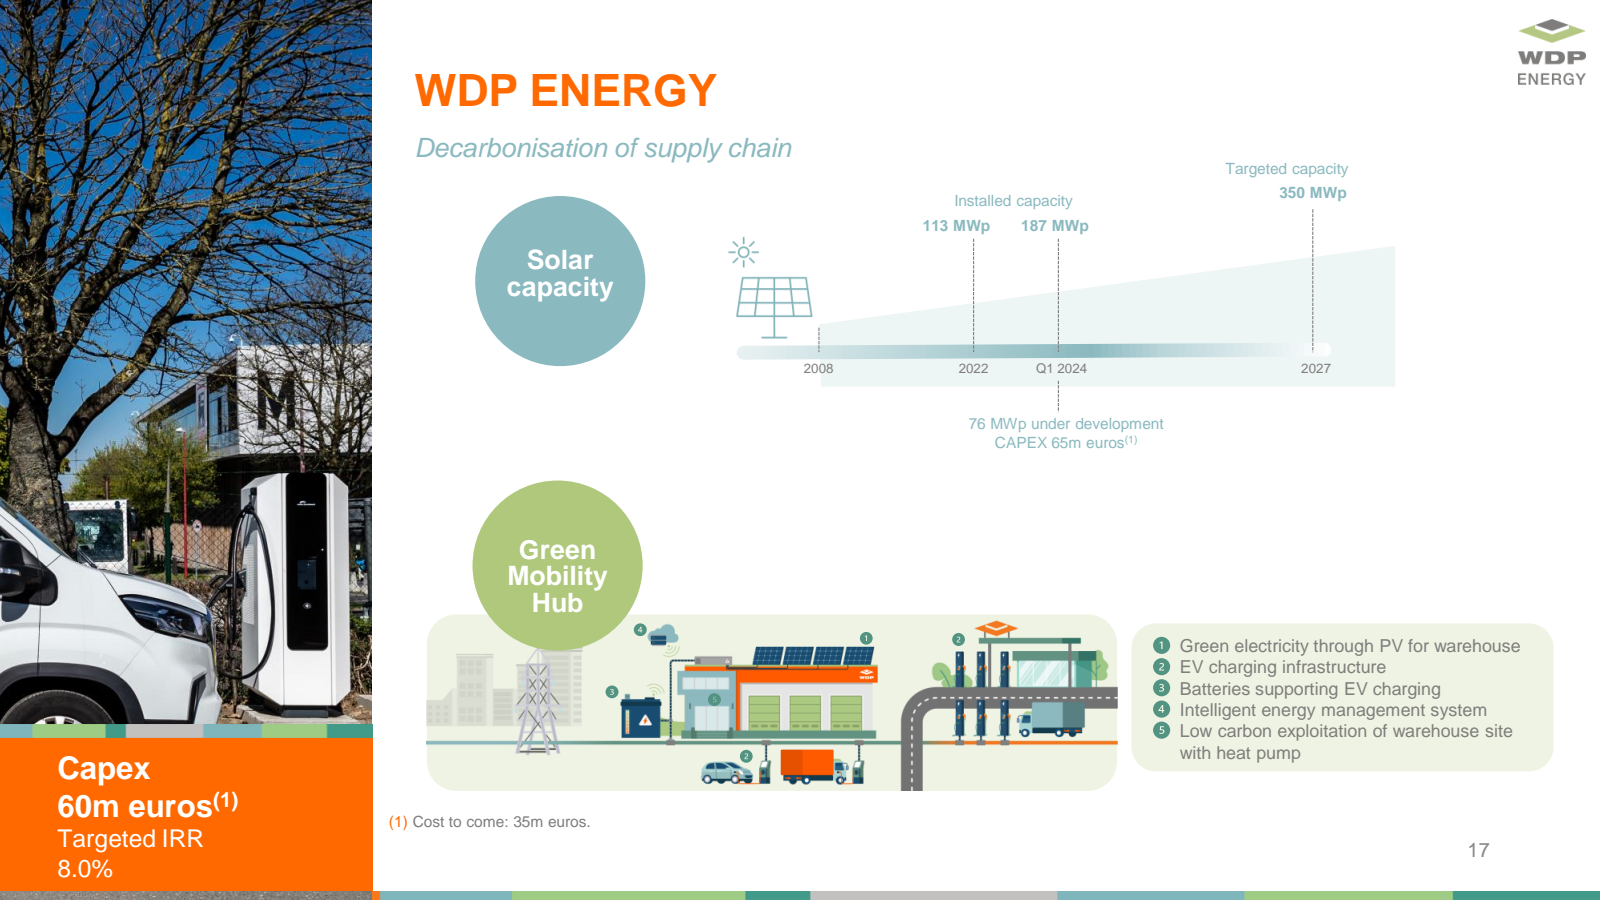 WDP ENERGY 

Decarbo